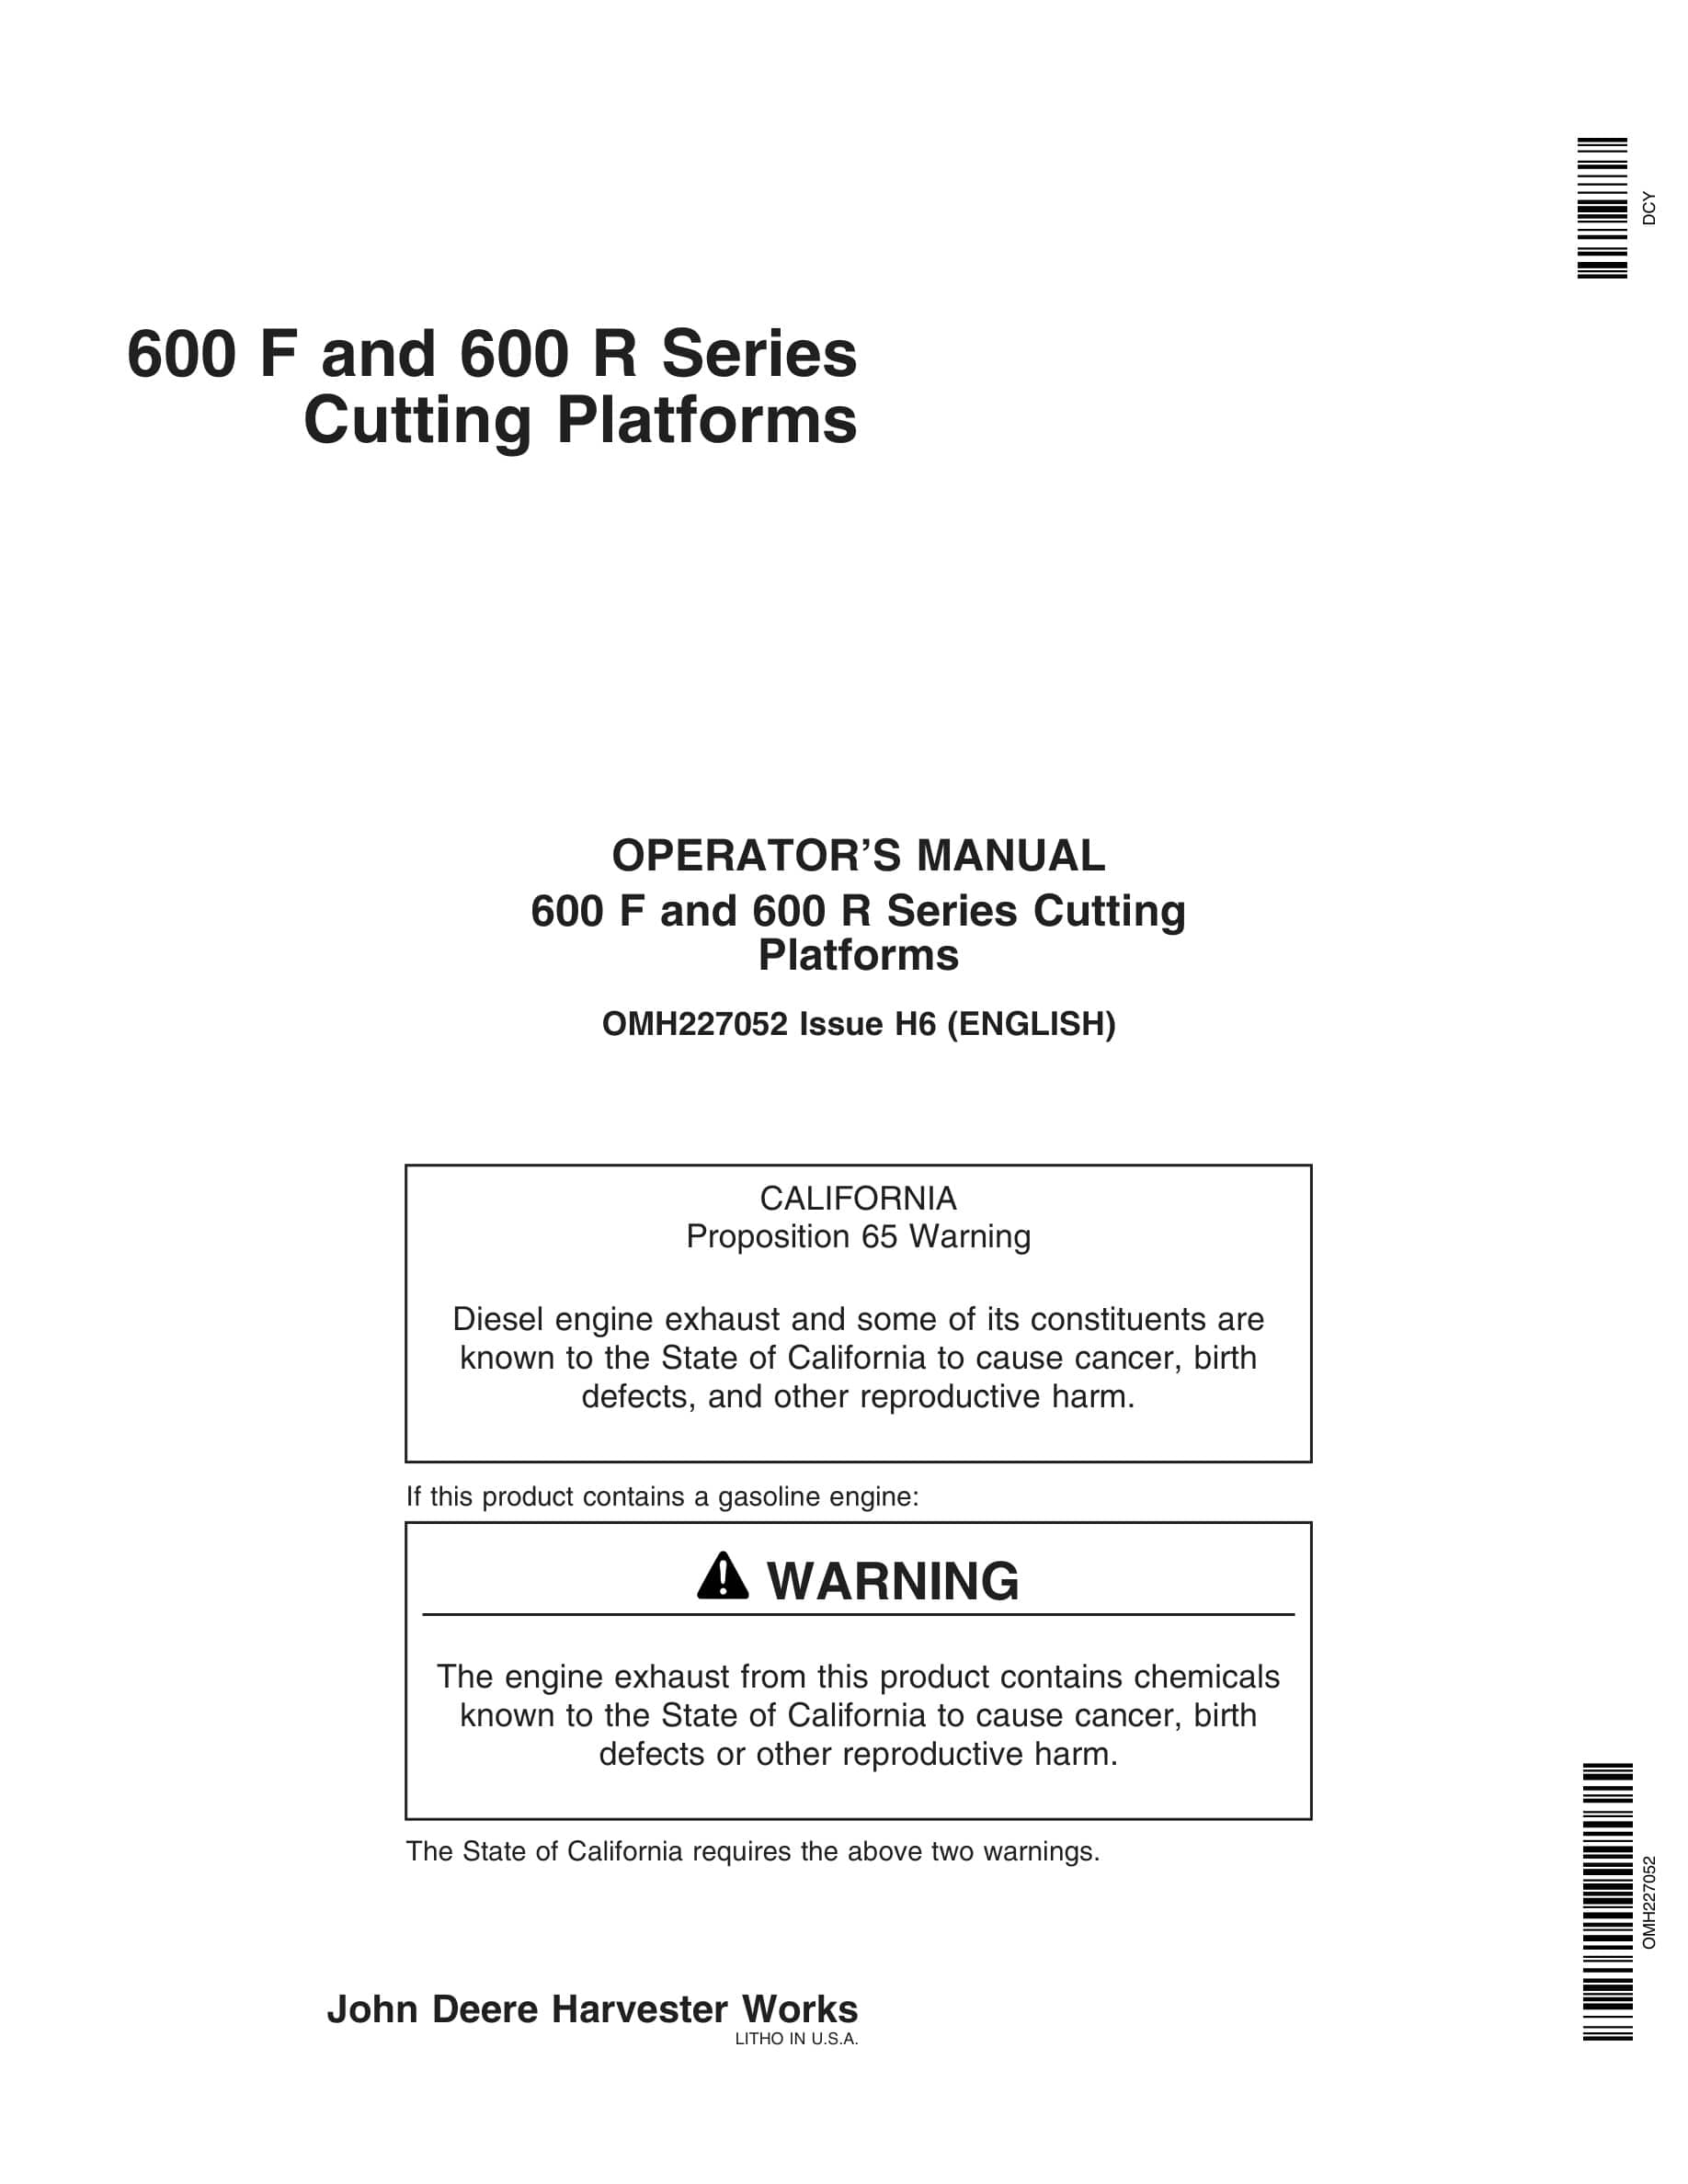 John Deere 600 F and 600 R Series Cutting Platforms Operator Manual OMH227052-1